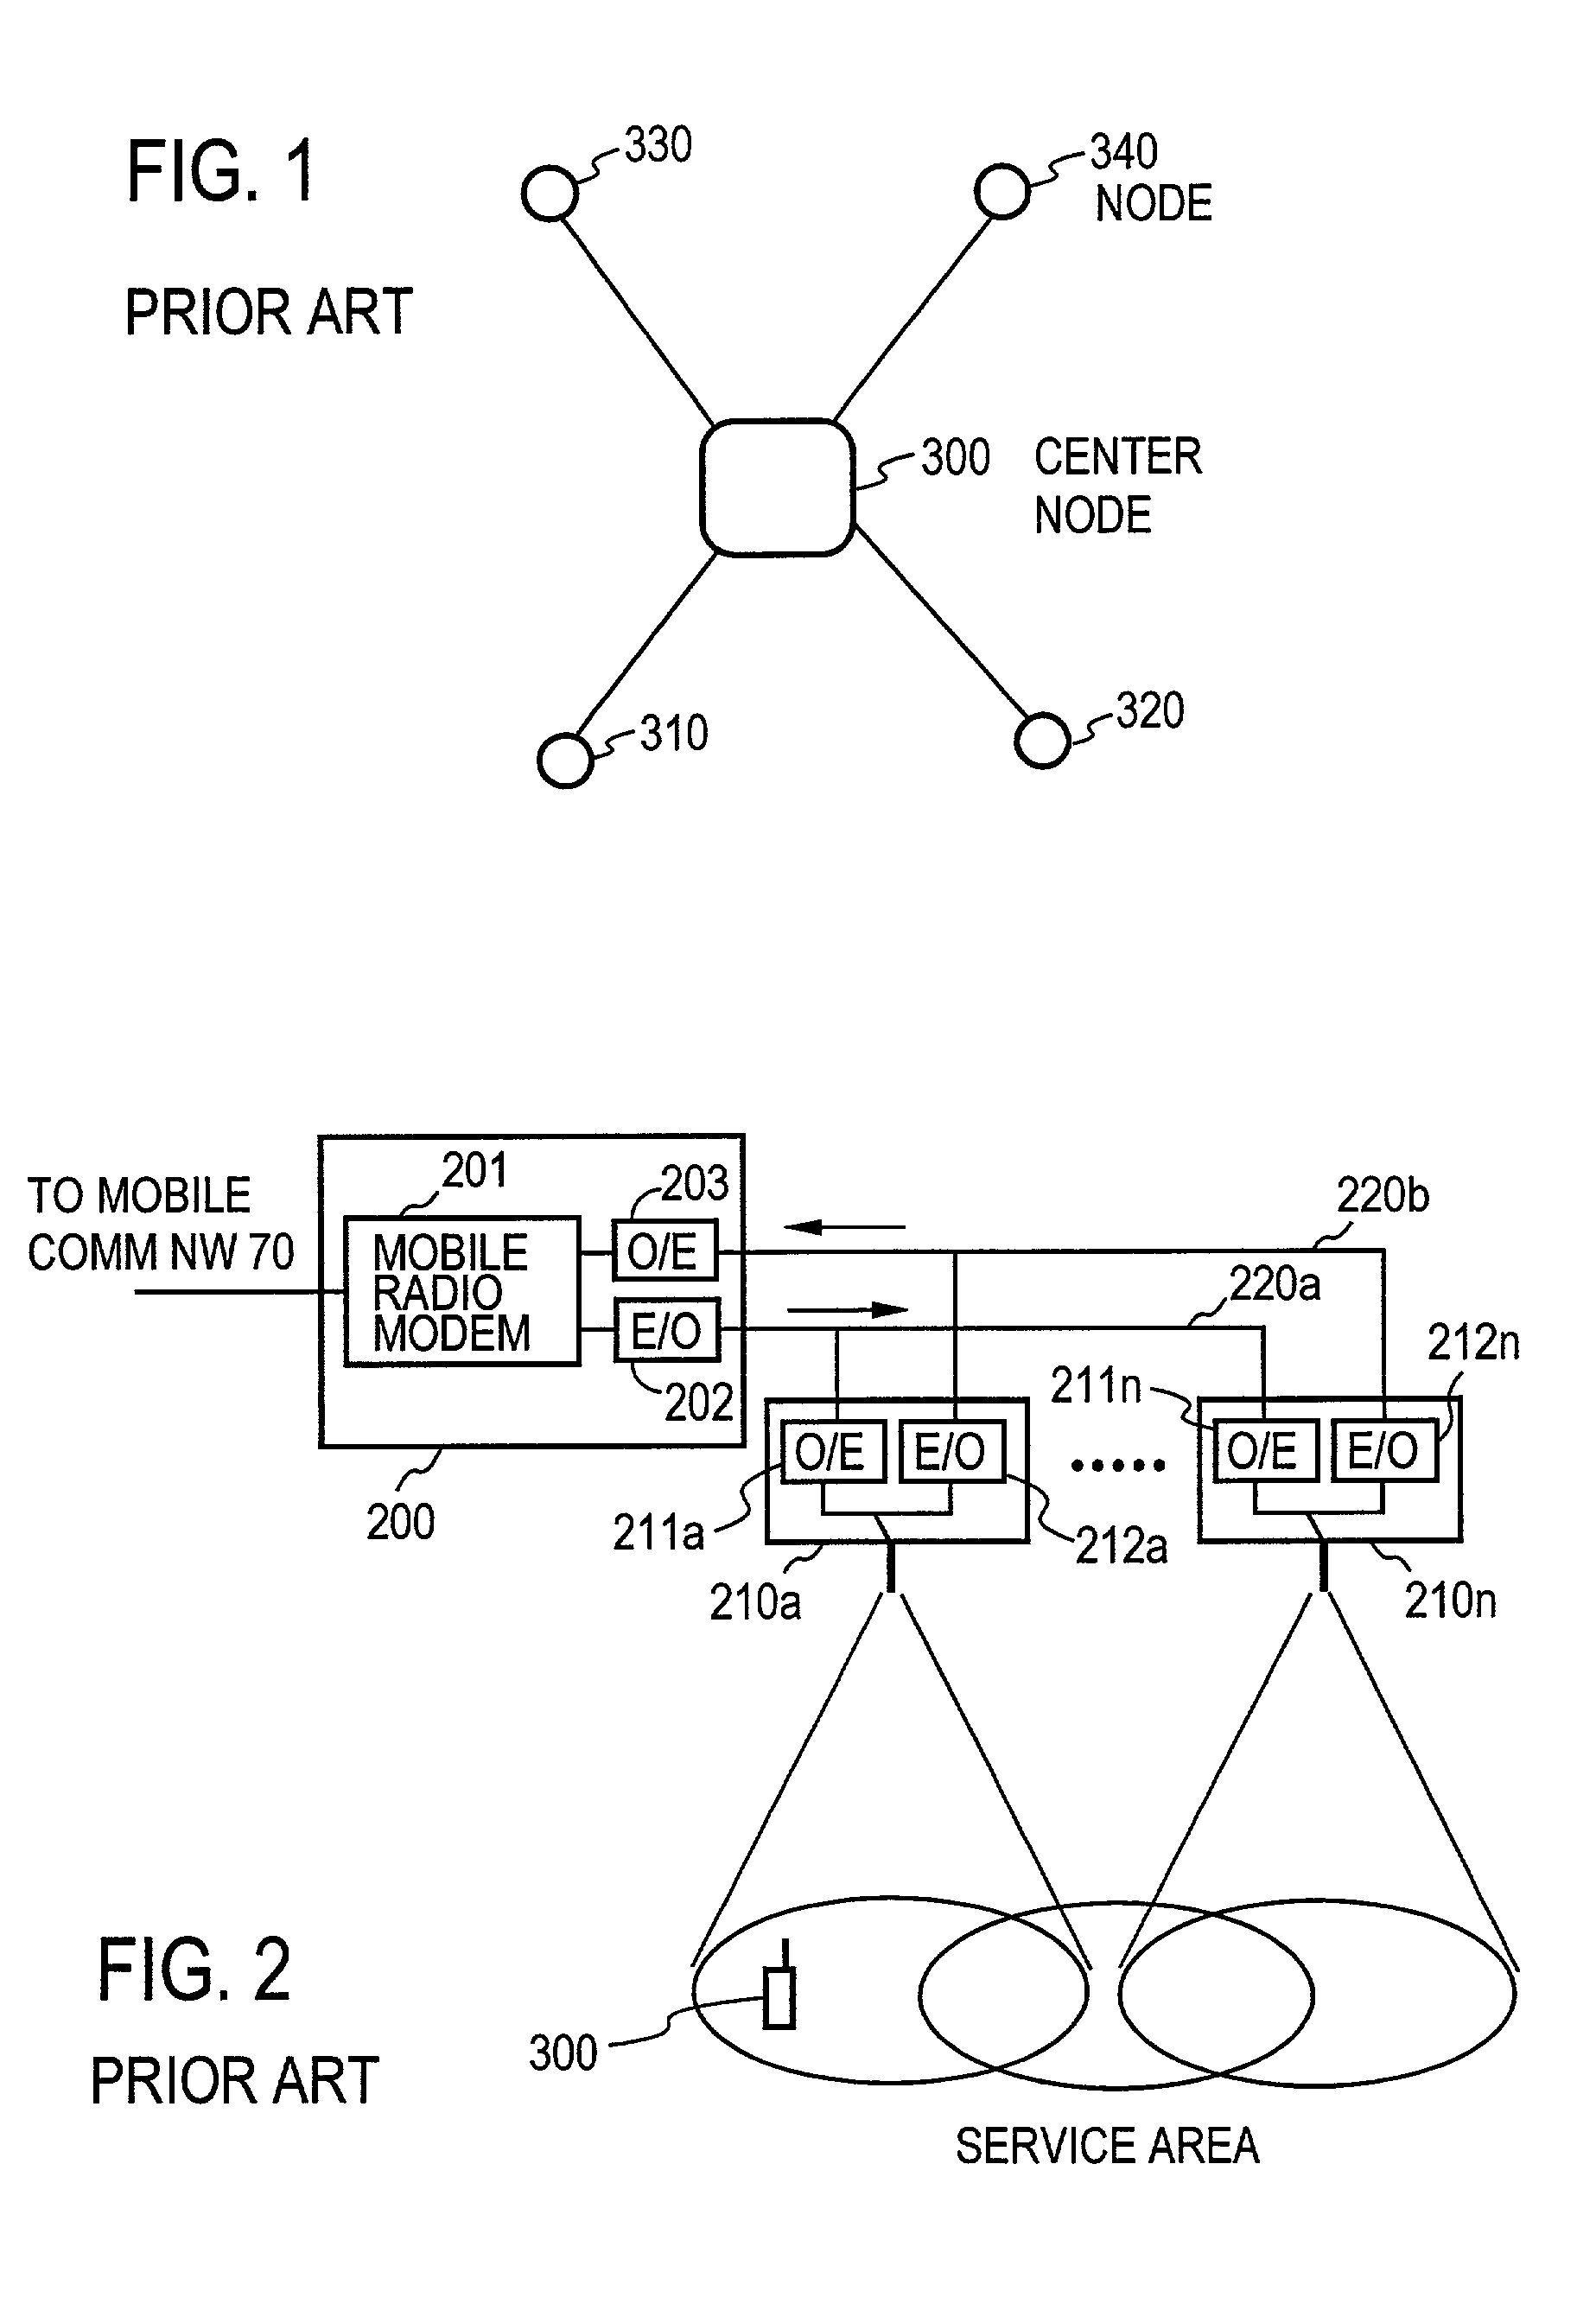 Communication system using optical fibers